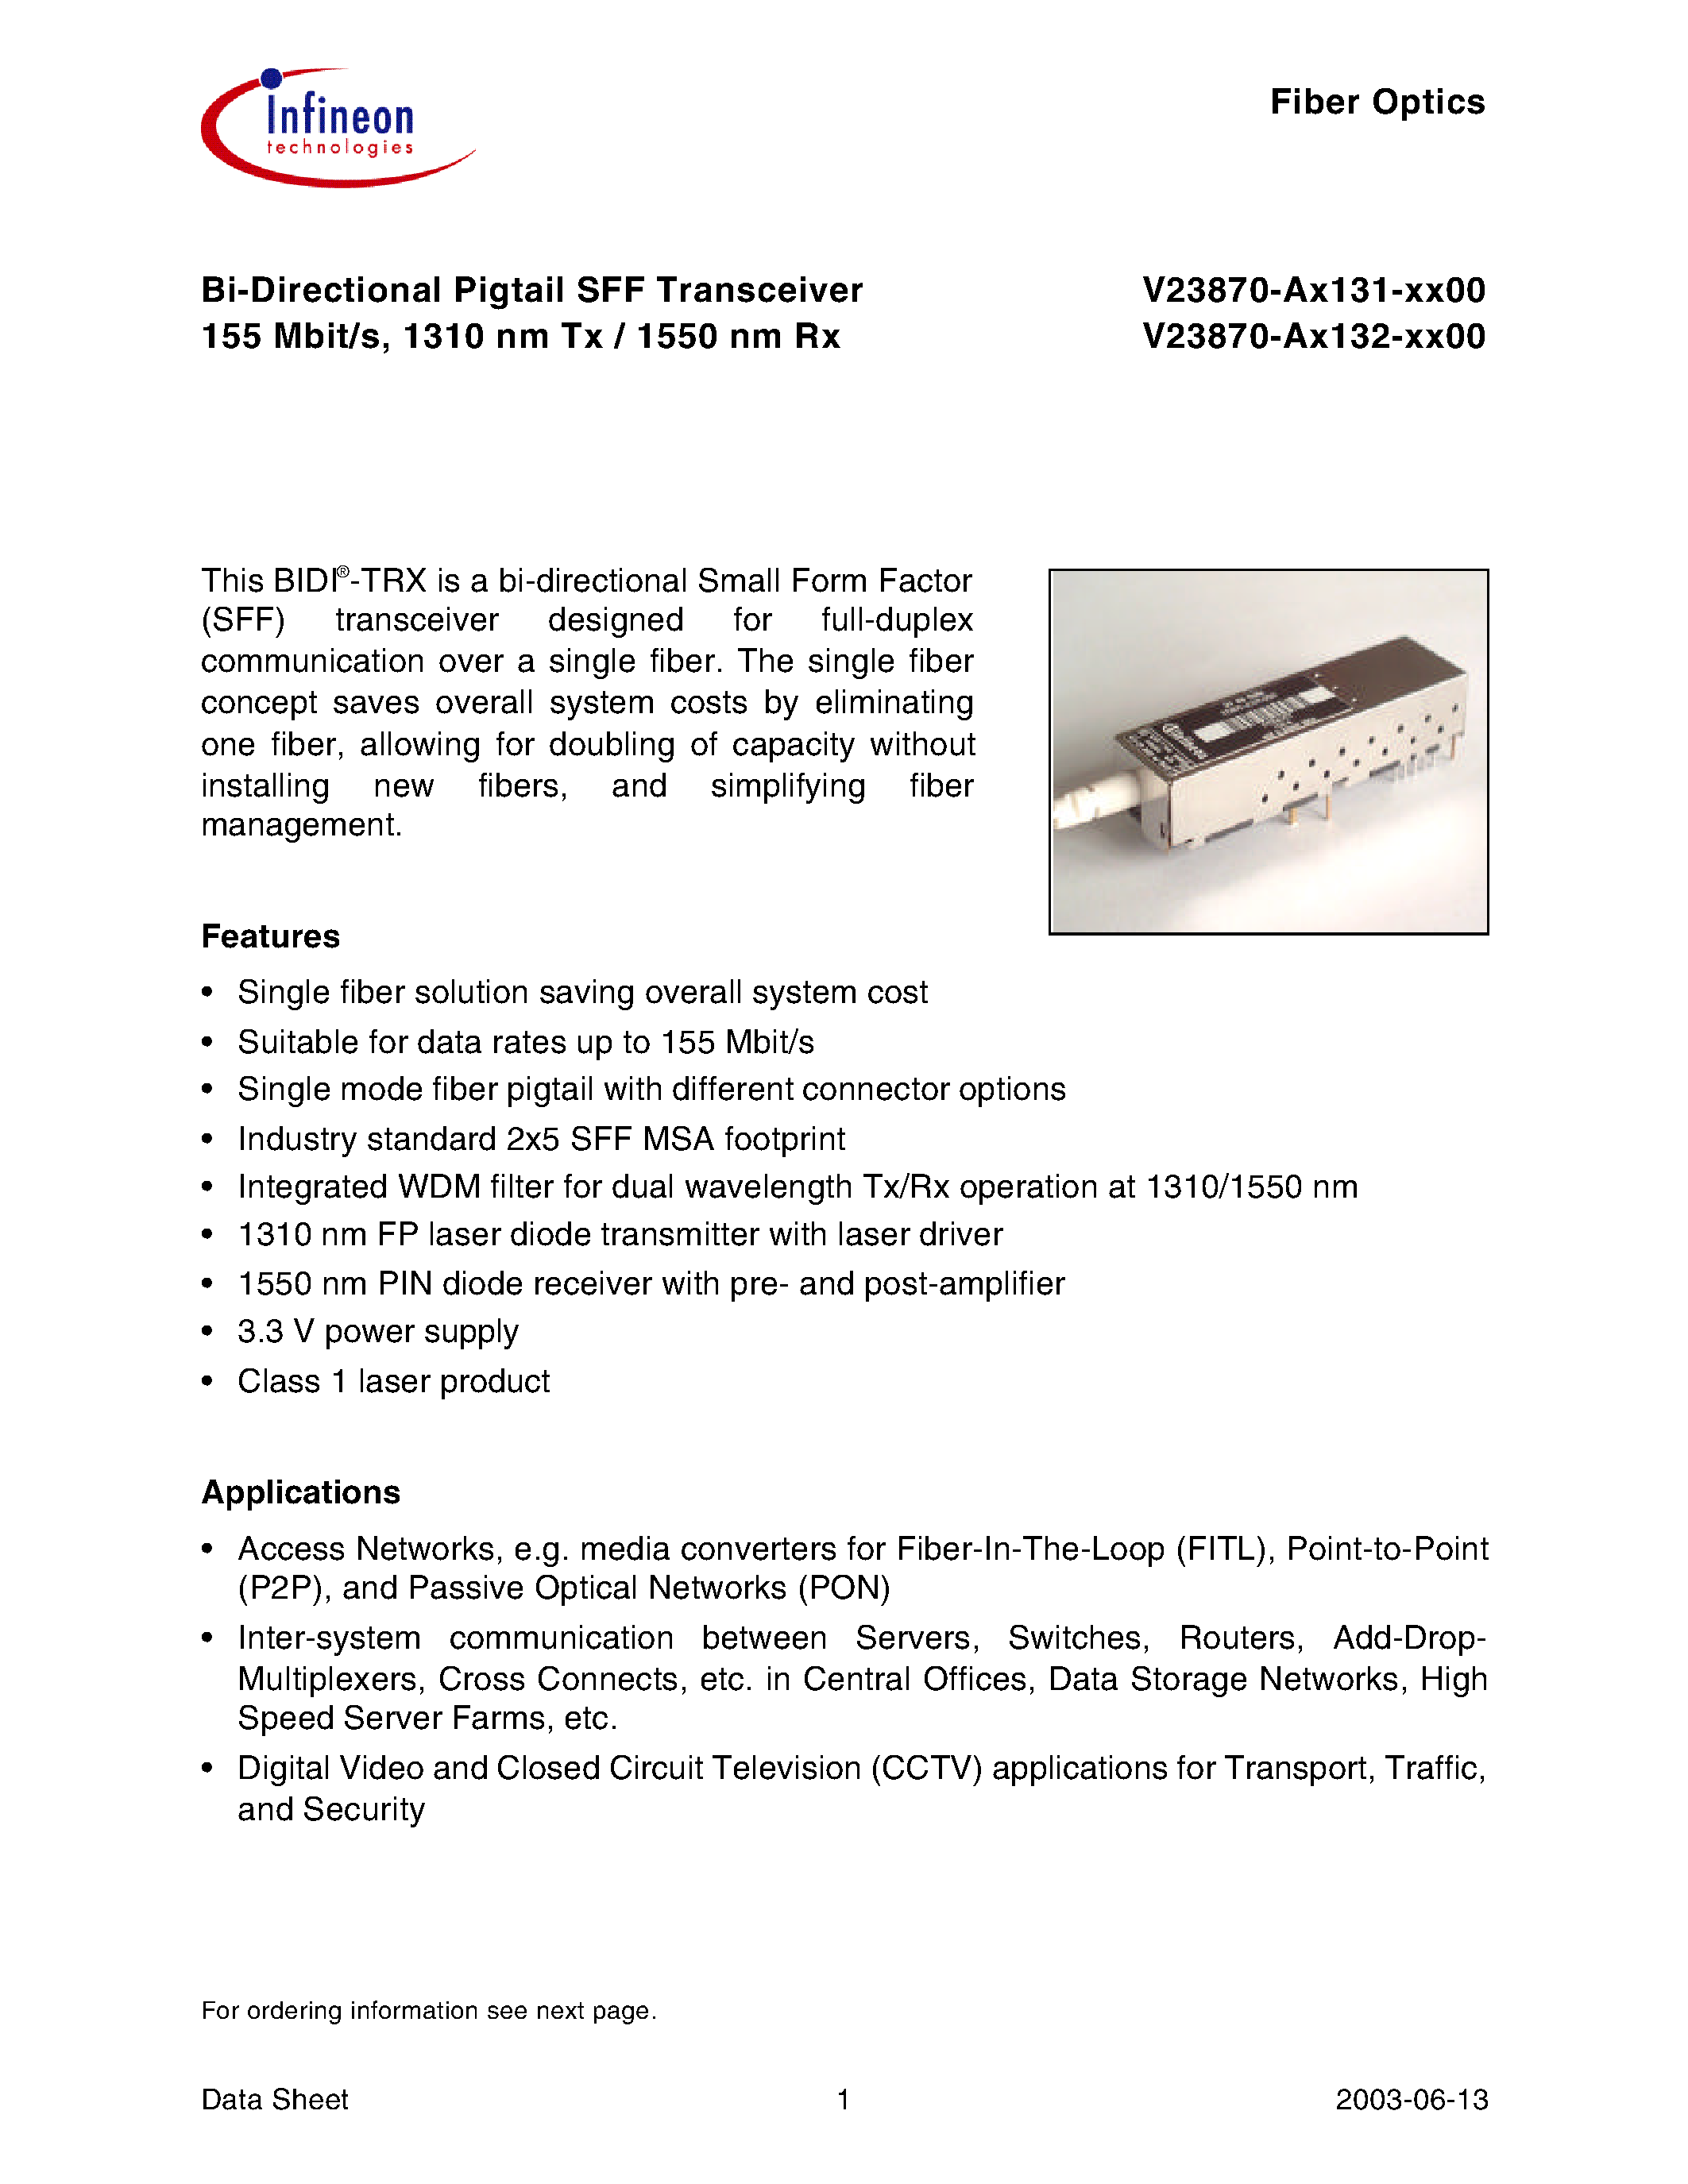 Даташит V23870-A3132-B100 - Bi-Directional Pigtail SFF Transceiver 155 Mbit/s/ 1310 nm Tx / 1550 nm Rx страница 1